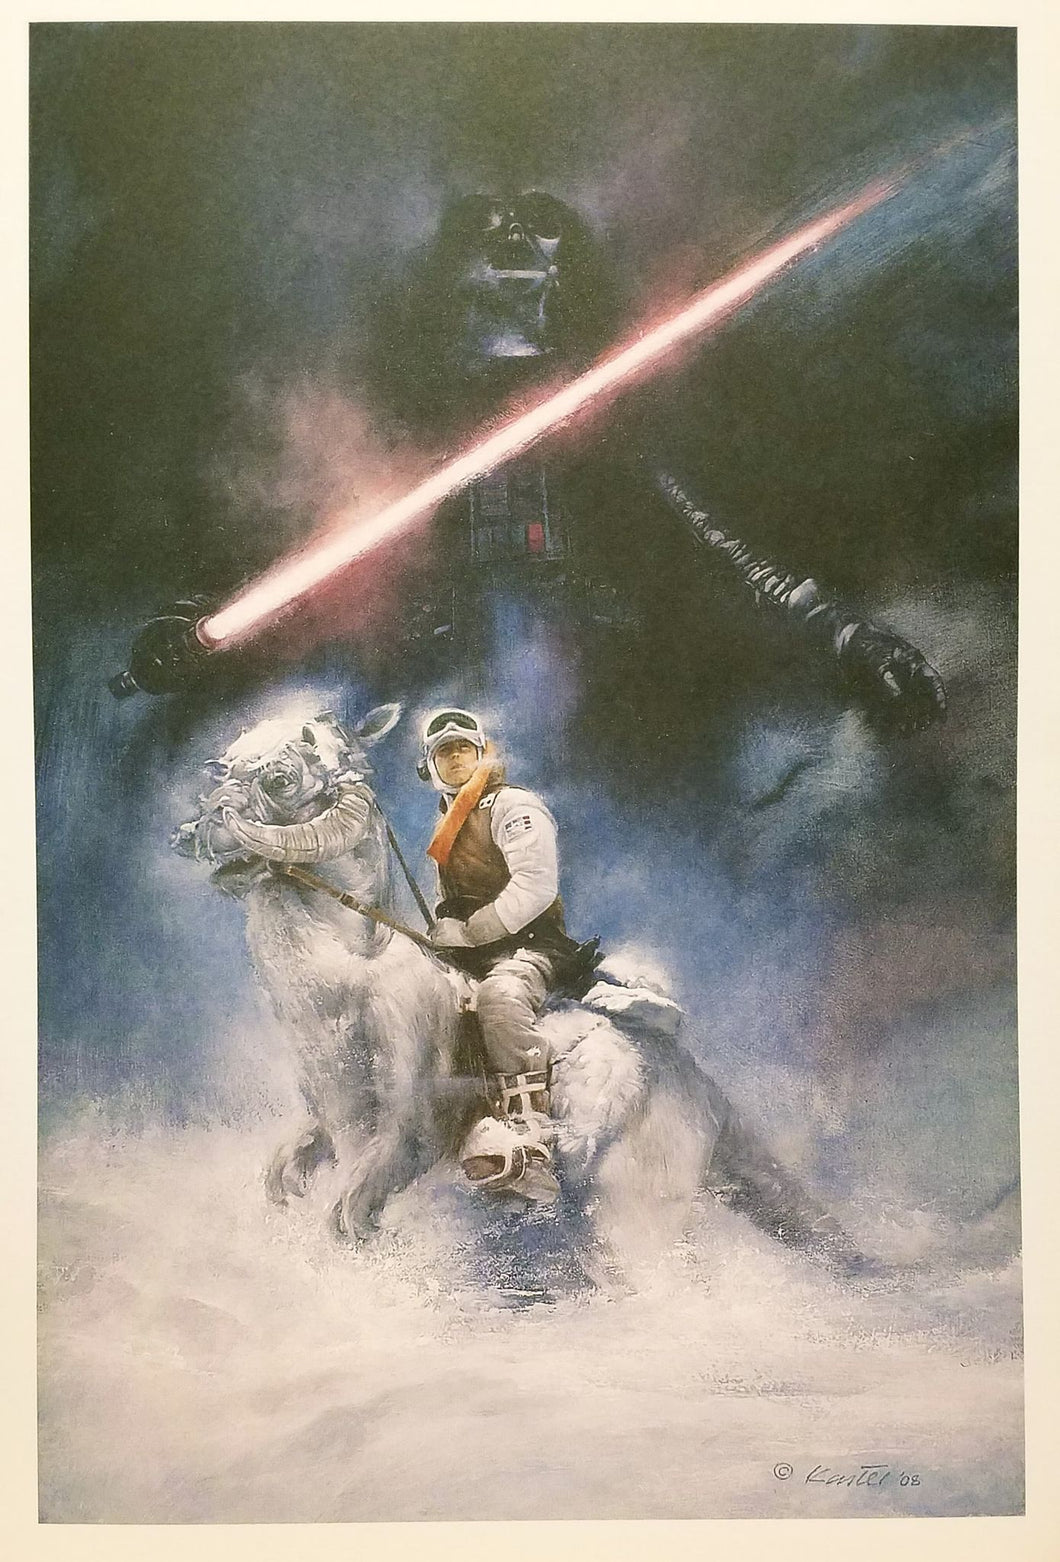 Star Wars Empire Strikes Back 11x16 Movie Art Poster Print by Roger Kastel